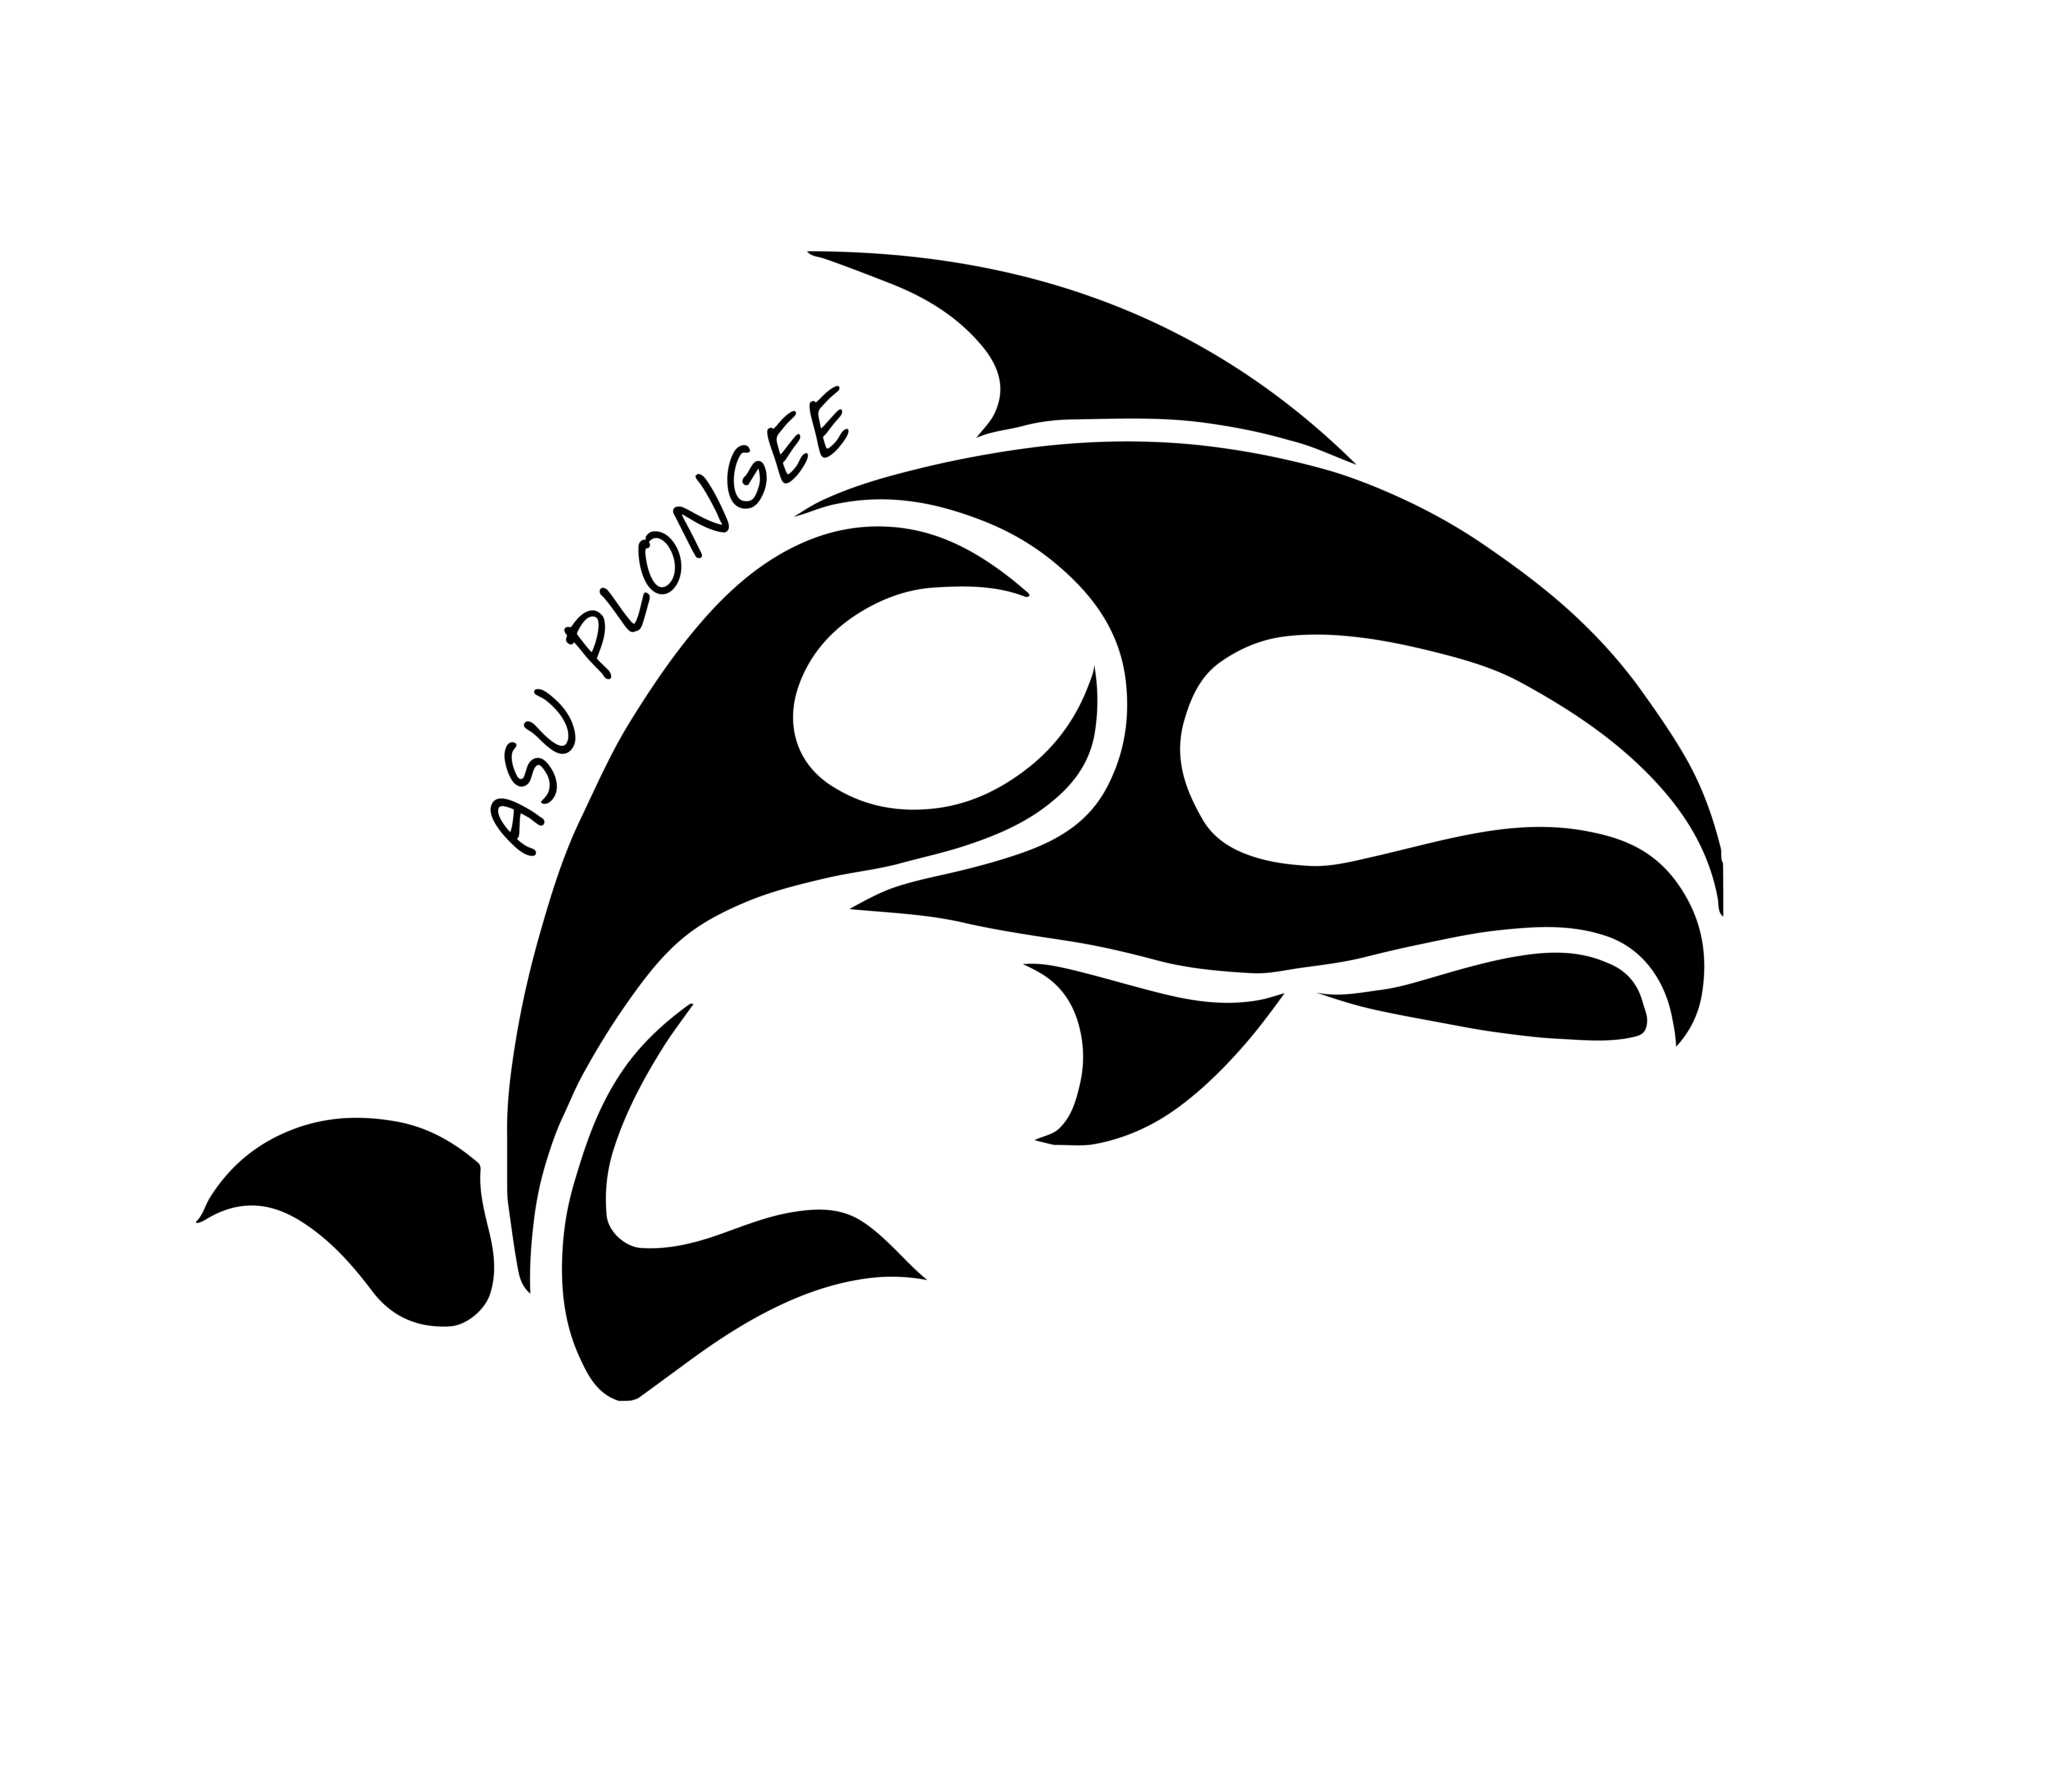 Asu Plongée - Club de plongée Logo